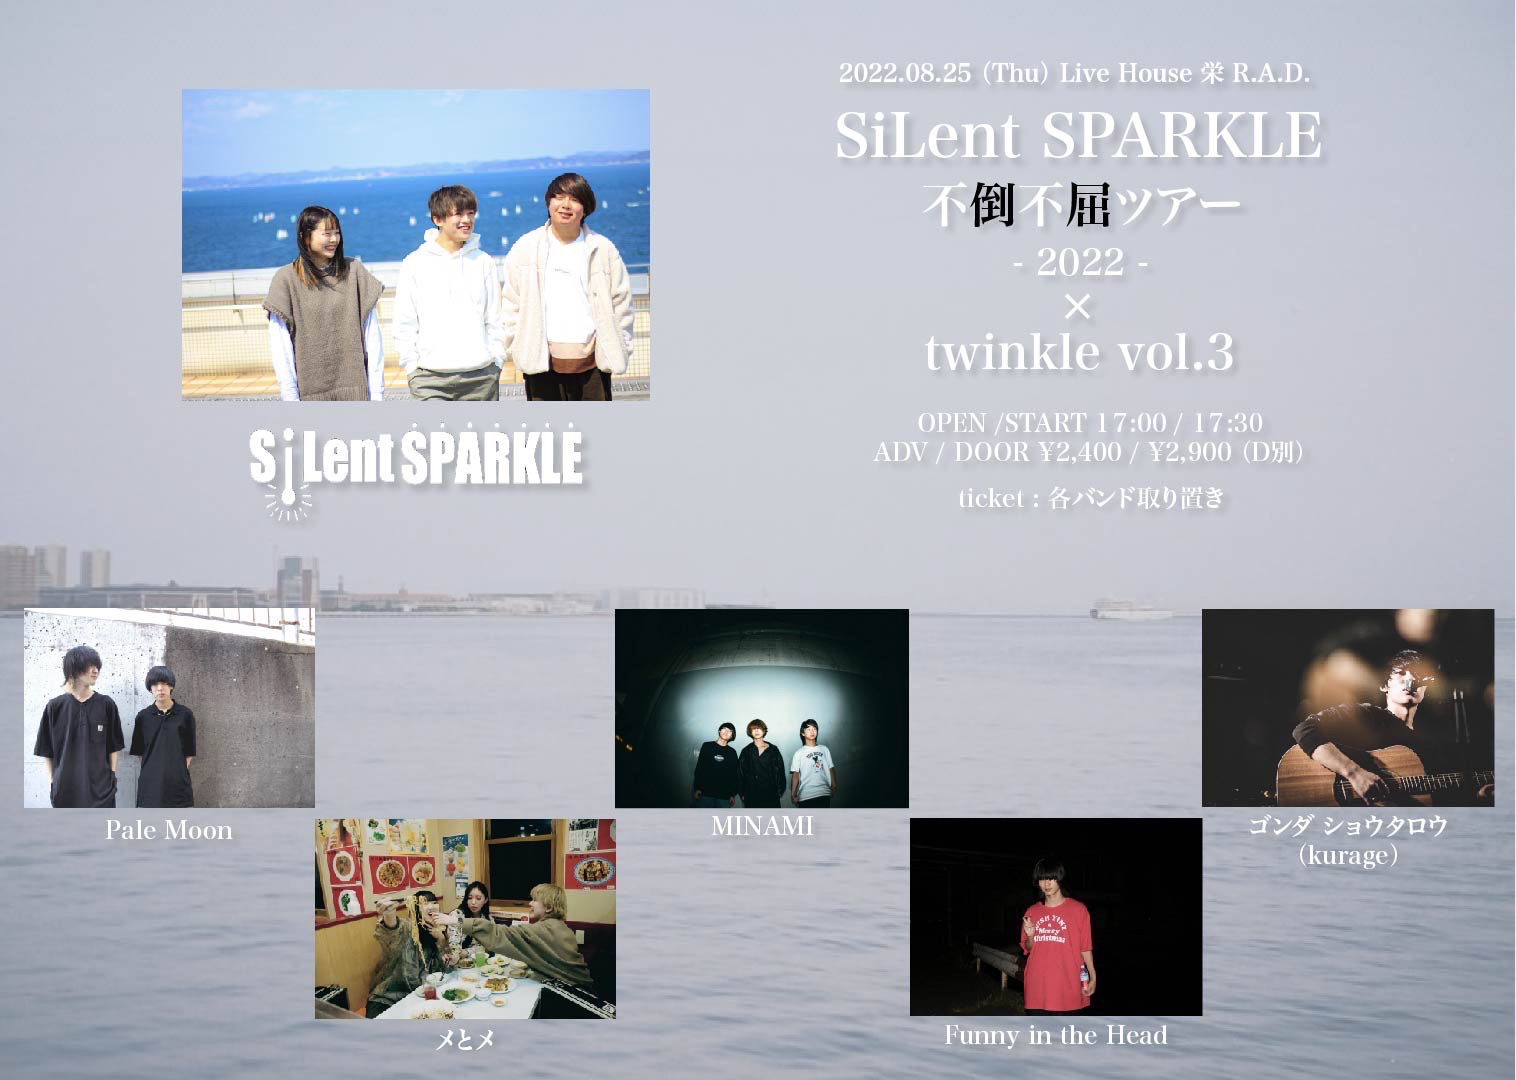 SiLent SPARKLE 不倒不屈ツアー "twinkle" vol.3